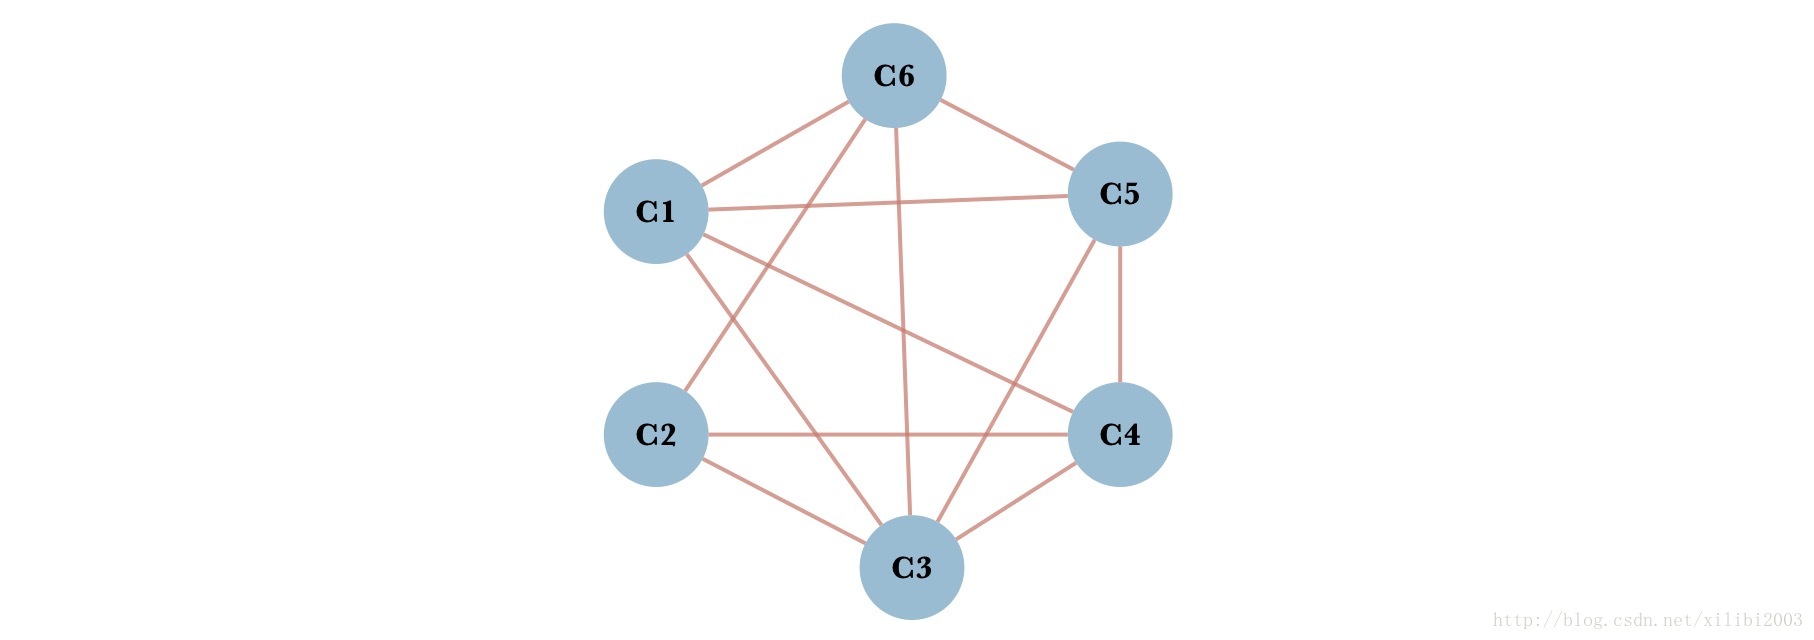 p2p网络模型